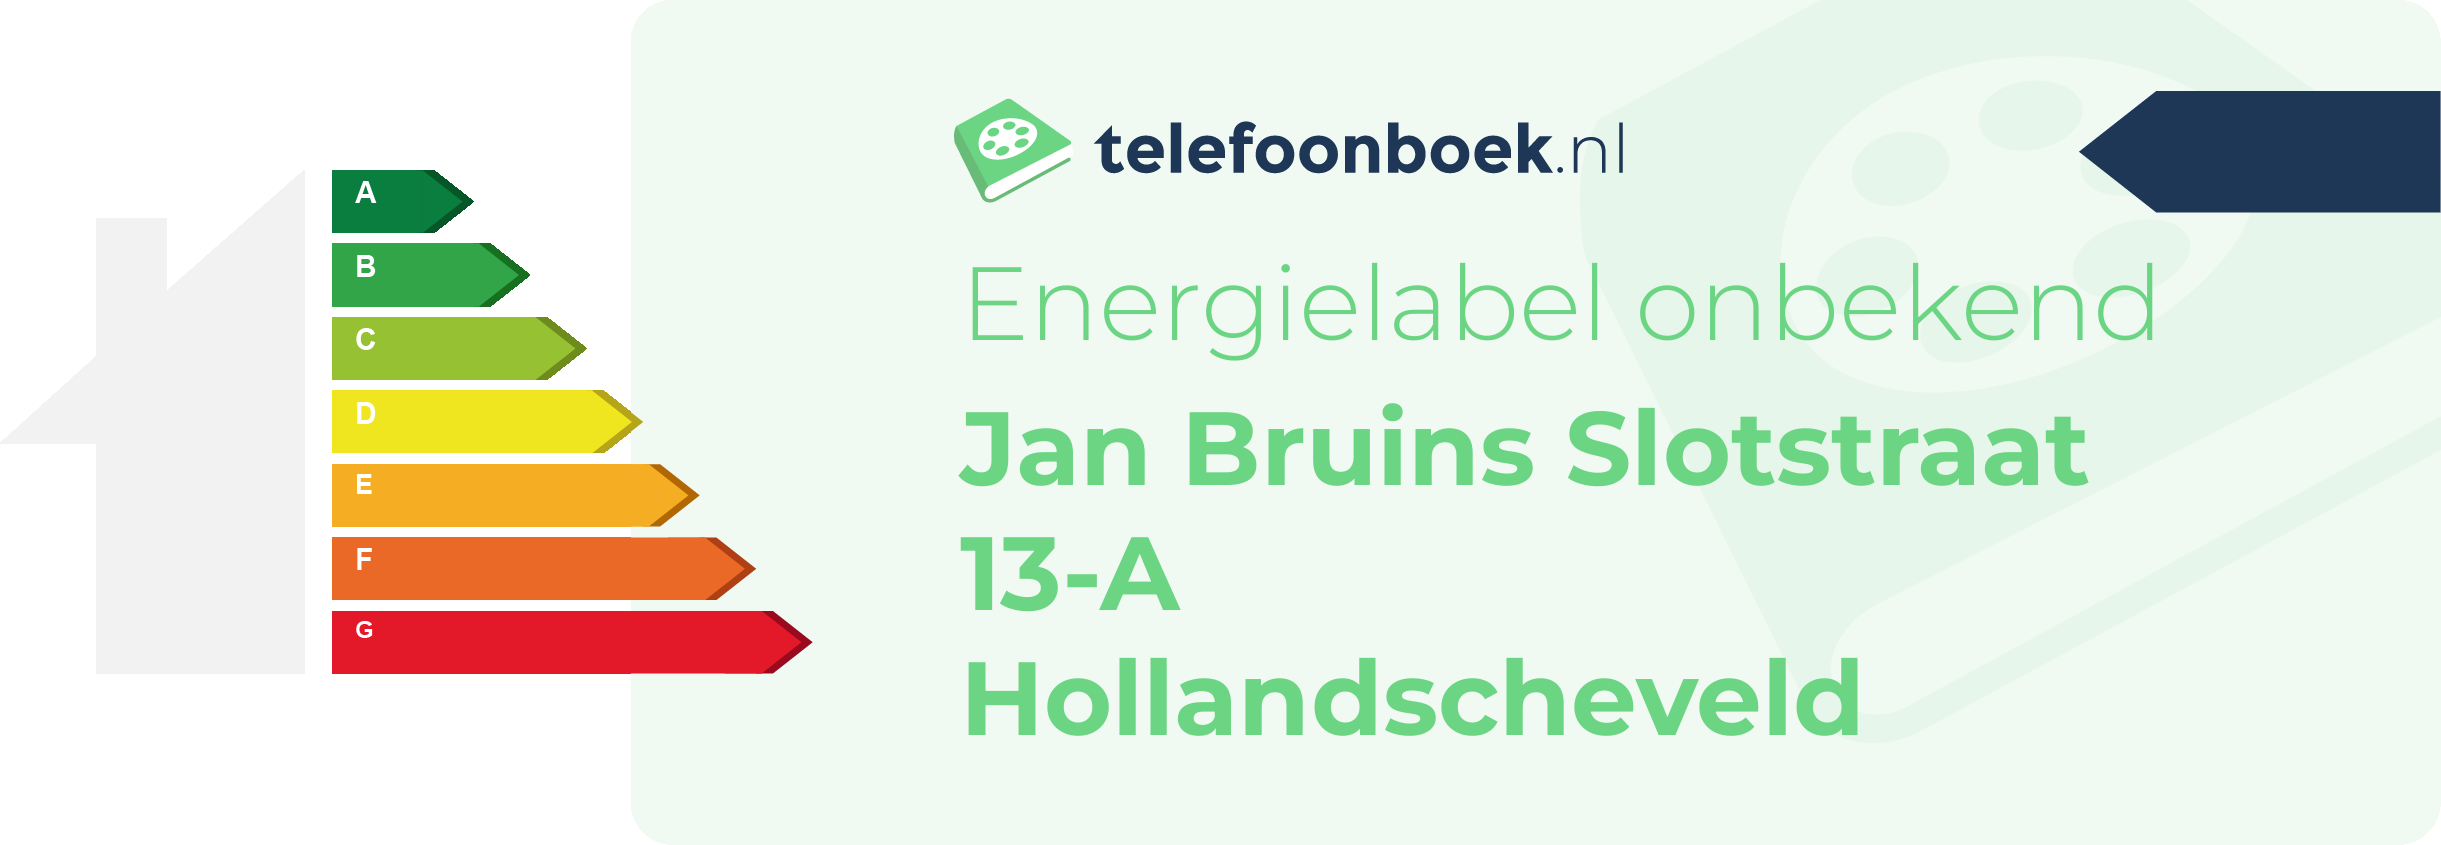 Energielabel Jan Bruins Slotstraat 13-A Hollandscheveld